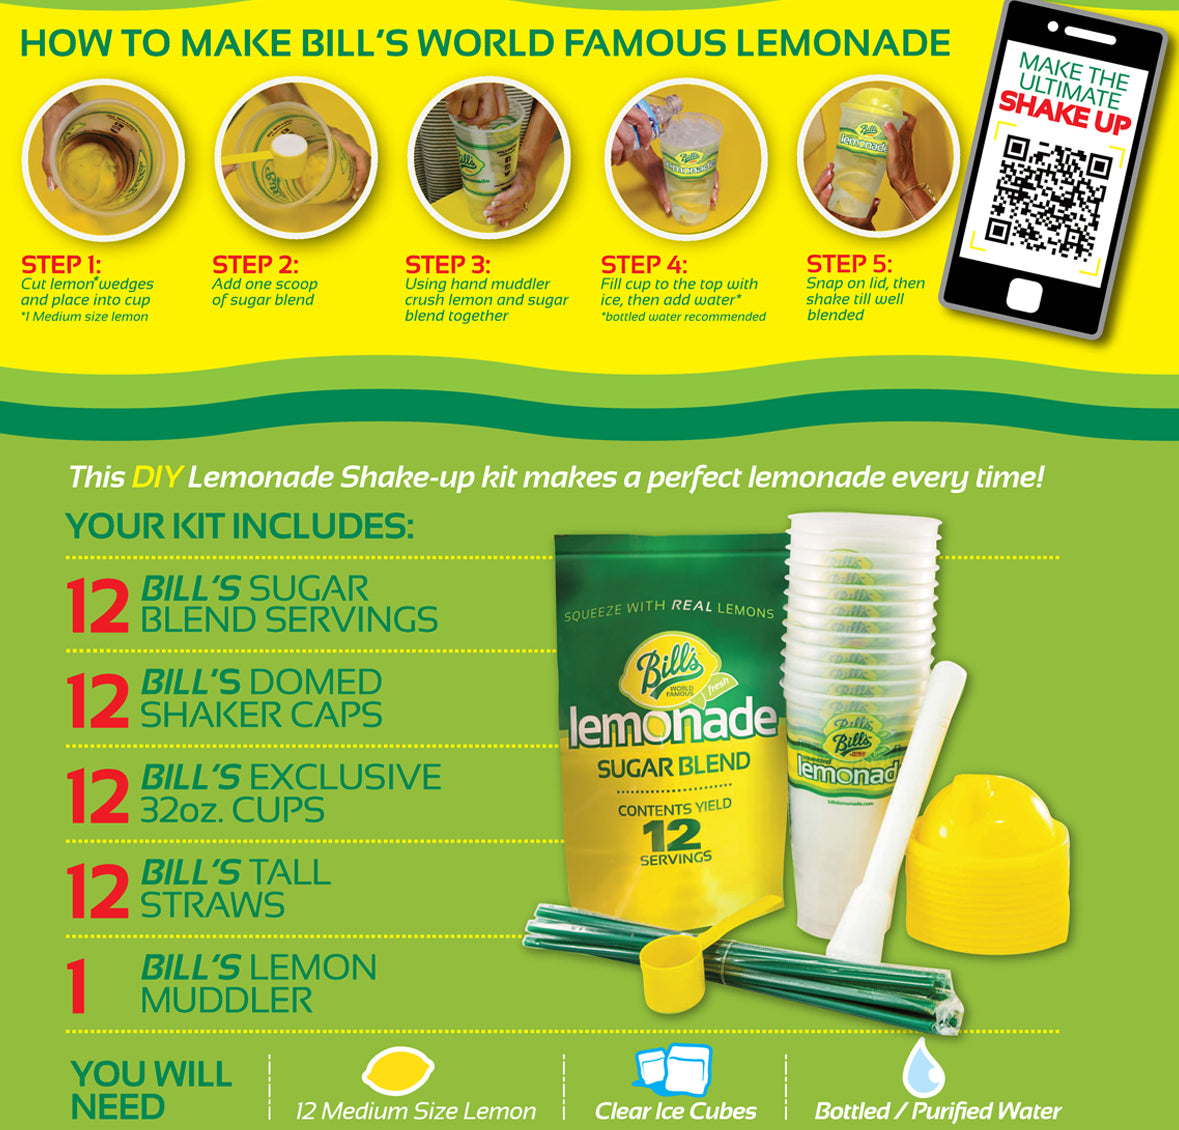 Wrapped Thick Green Straws - Bill's Lemonade